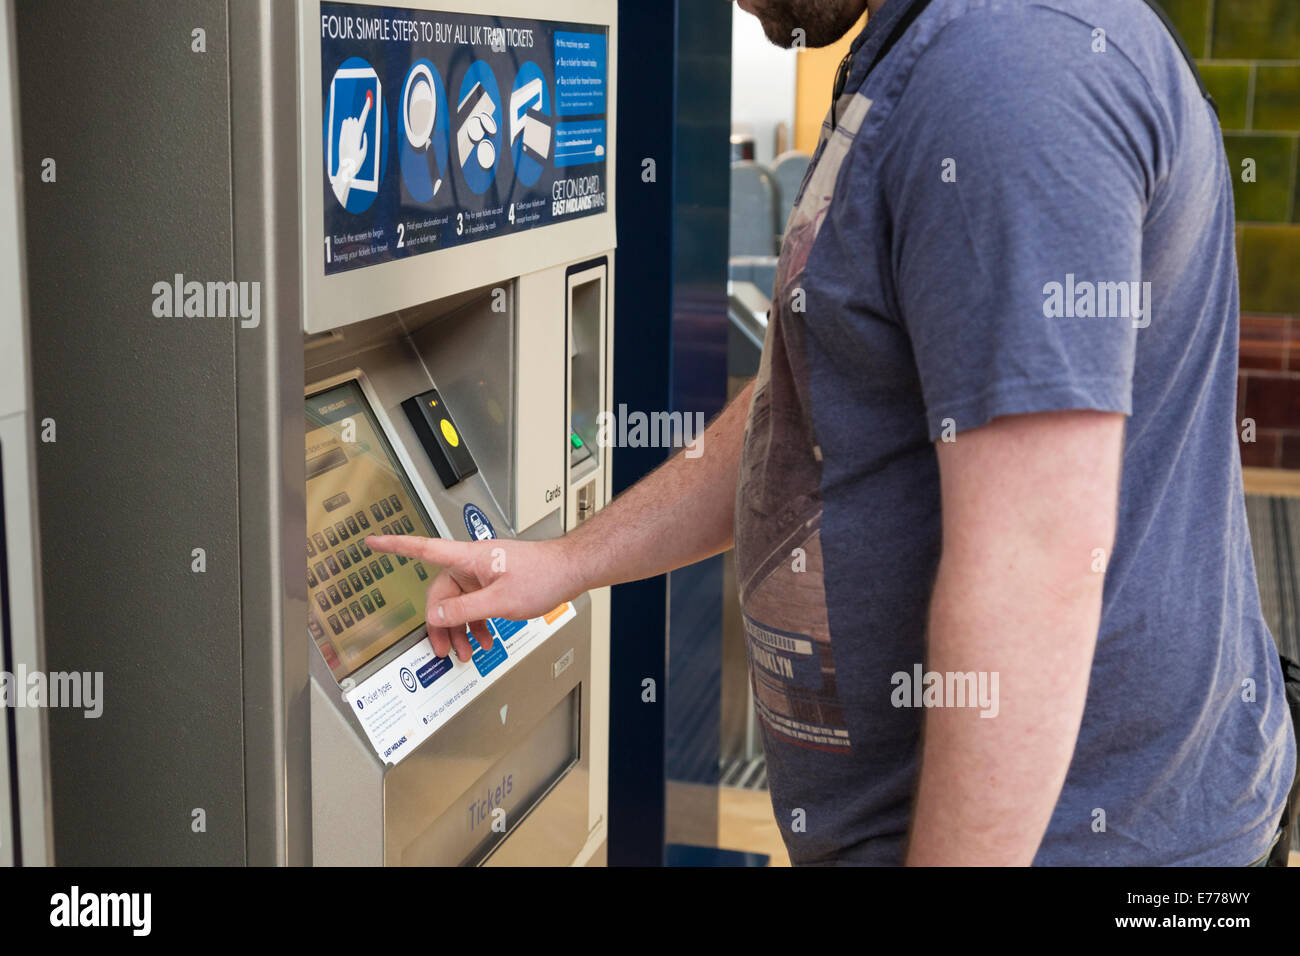 Persona que compra un billete de tren en una máquina de billetes en una estación de ferrocarril, Nottingham, Inglaterra, Reino Unido. Foto de stock